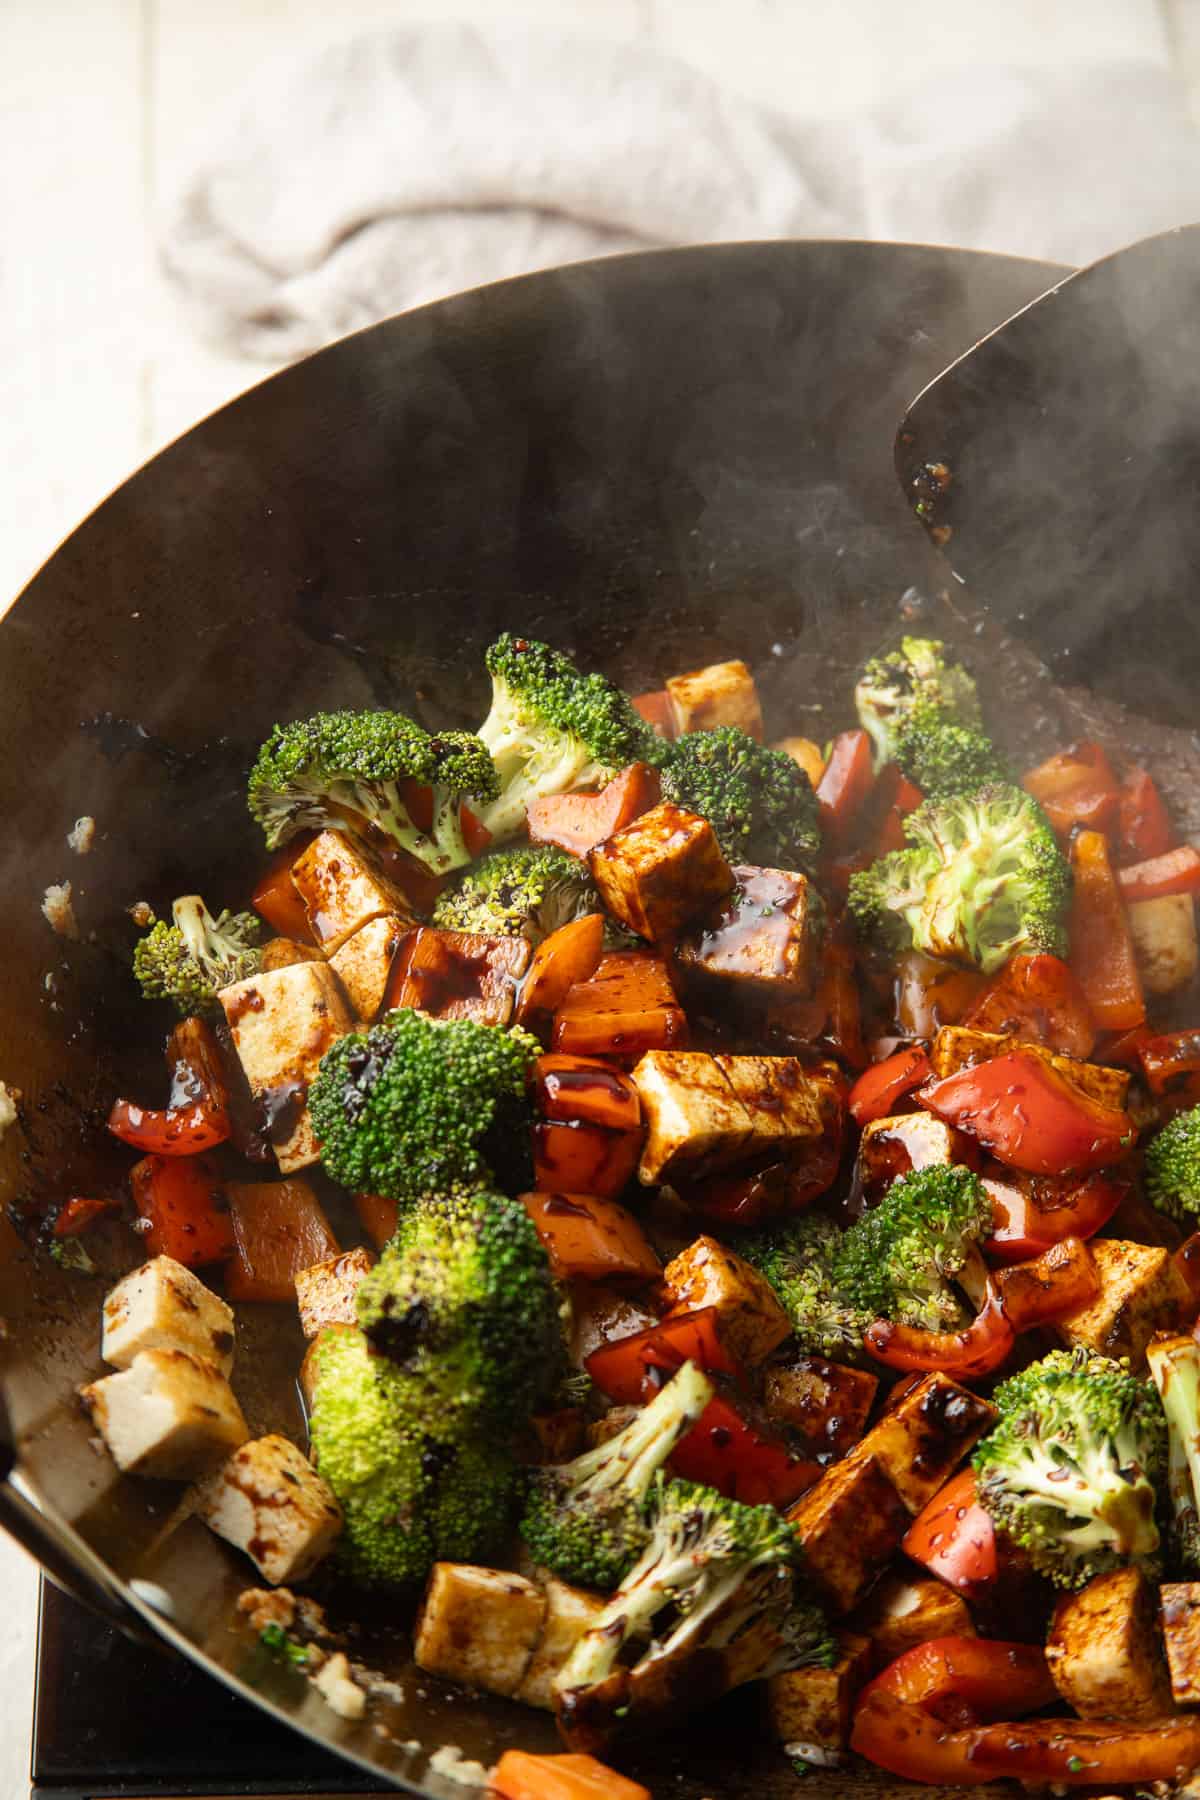 Tofu and veggies stir-frying in a wok.